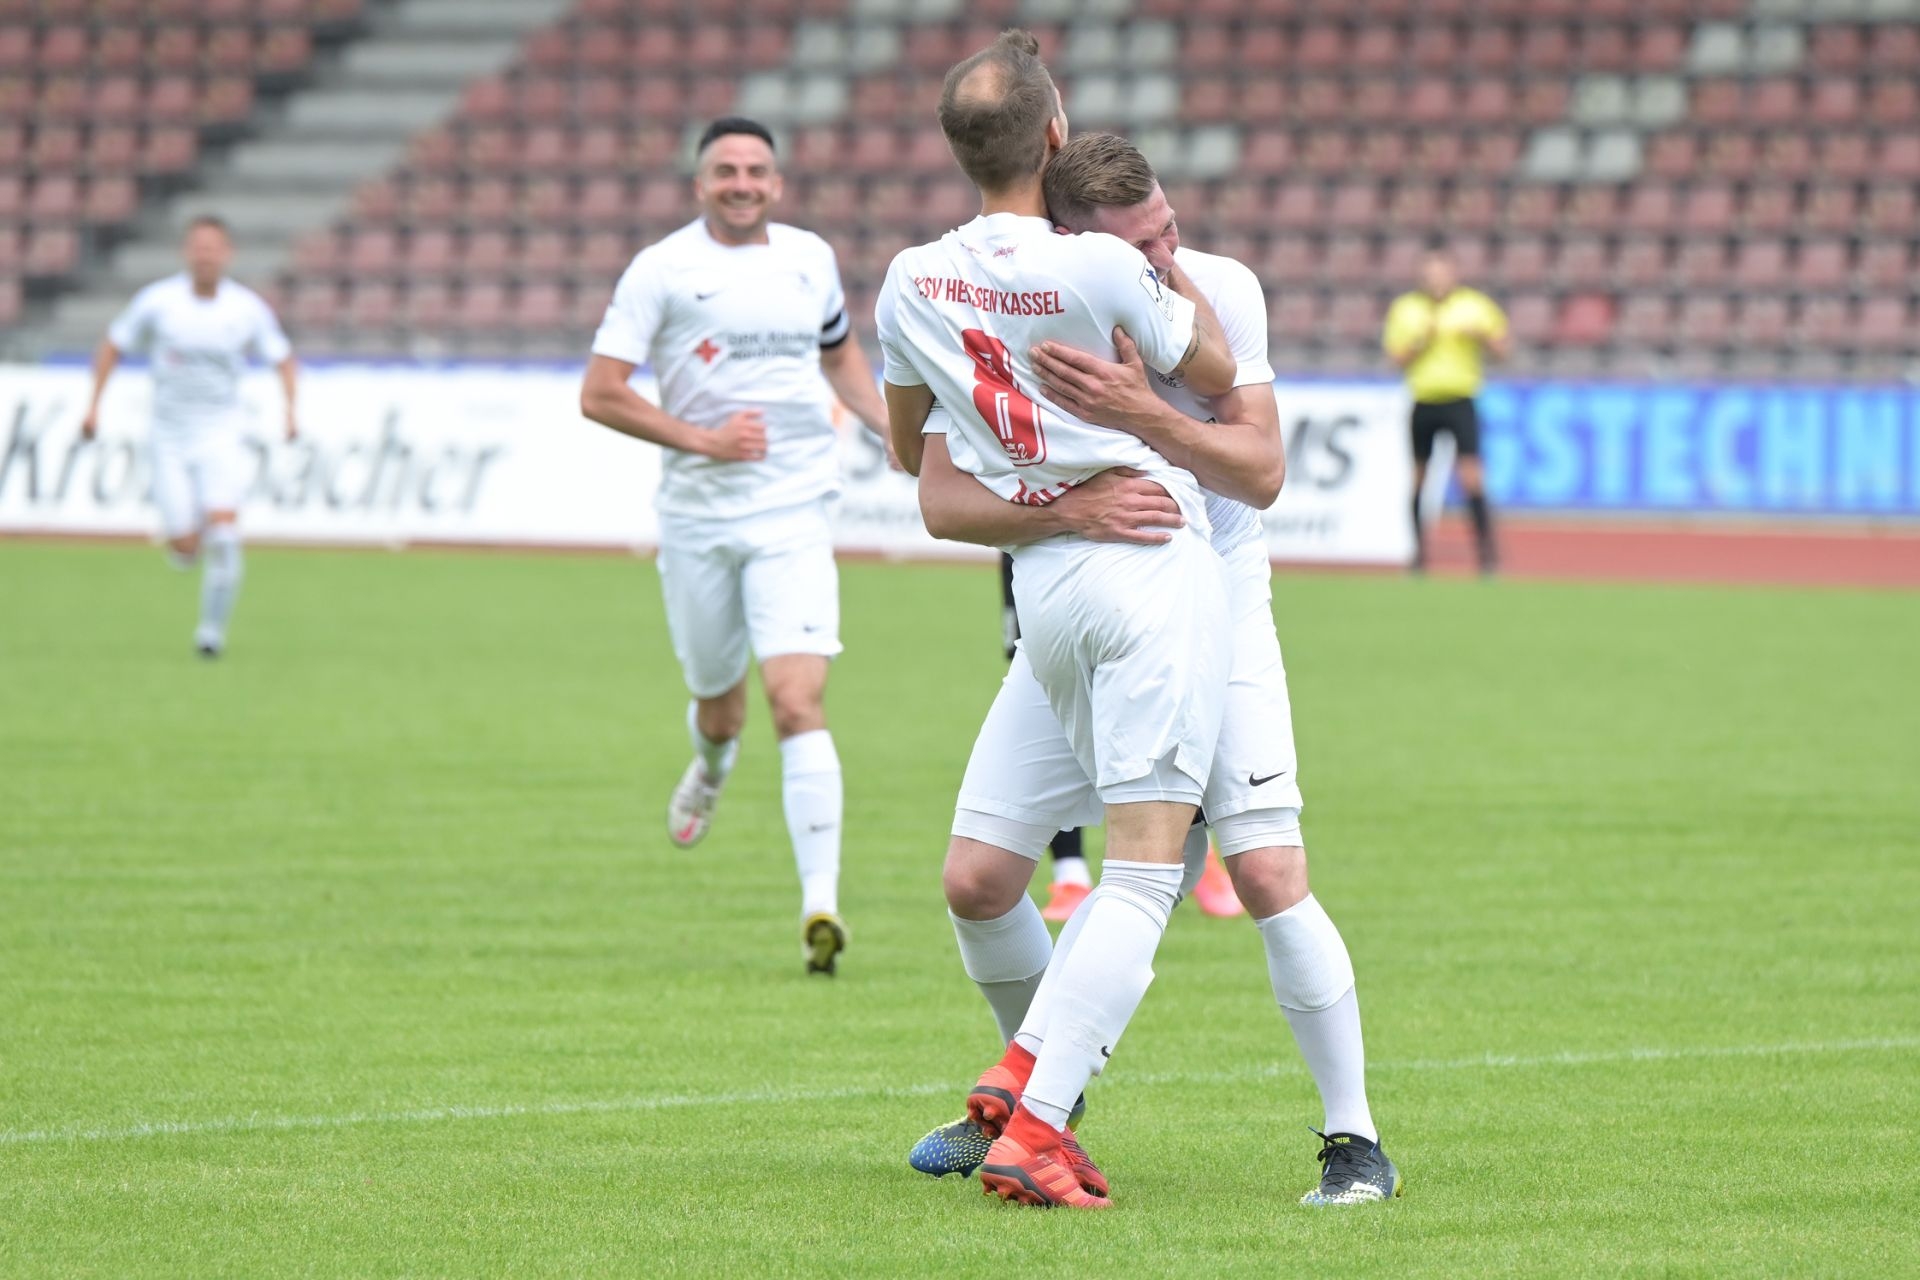 Regionalliga Südwest 2020/21, KSV Hessen Kassel, SSV Ulm 1846, Endstand 3:1, Jubel zum 1:0